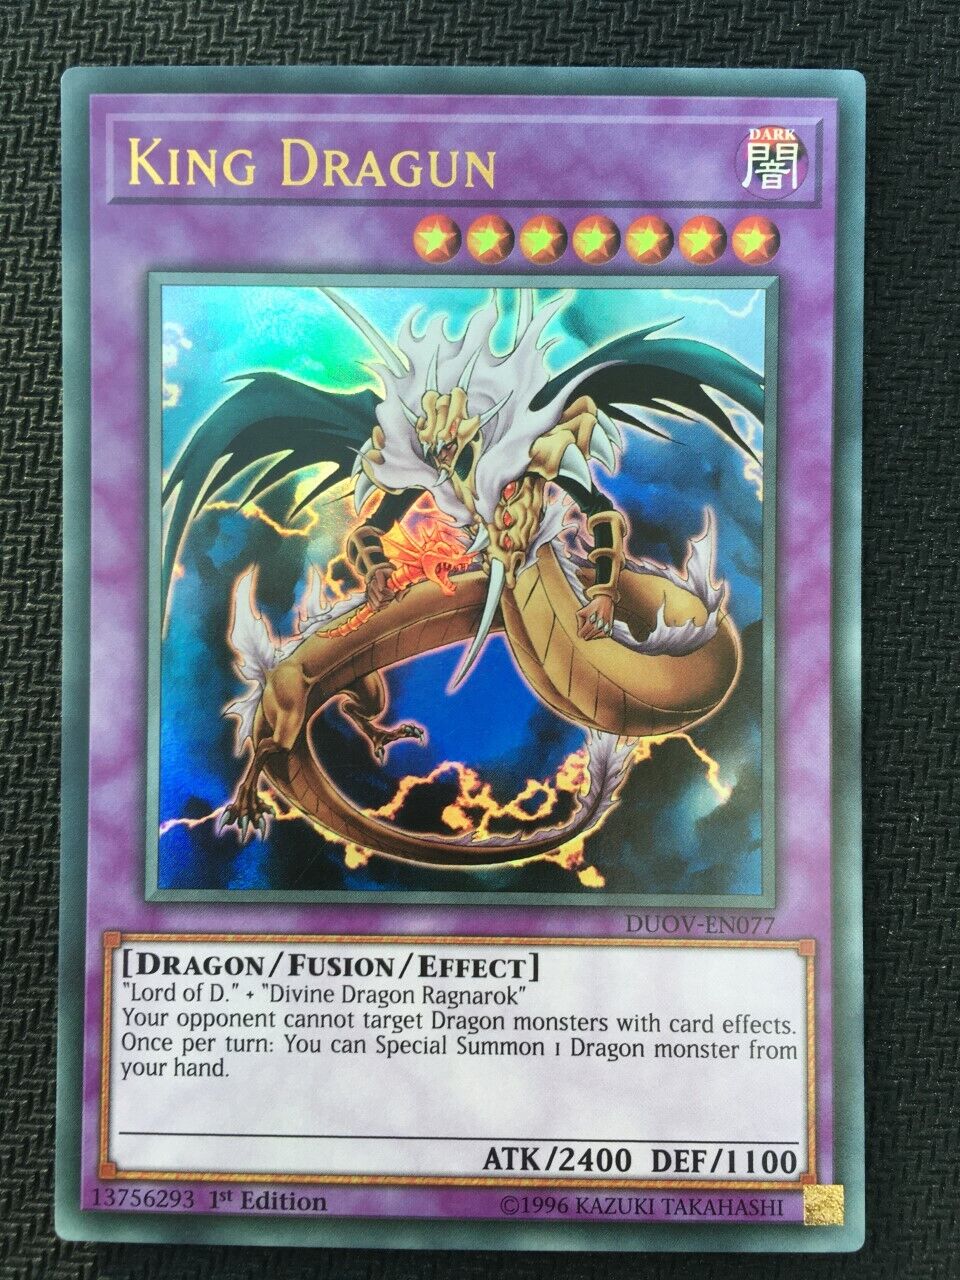 DUOV-EN077 King Dragun Ultra Rare 1st Edition Mint YuGiOh Card